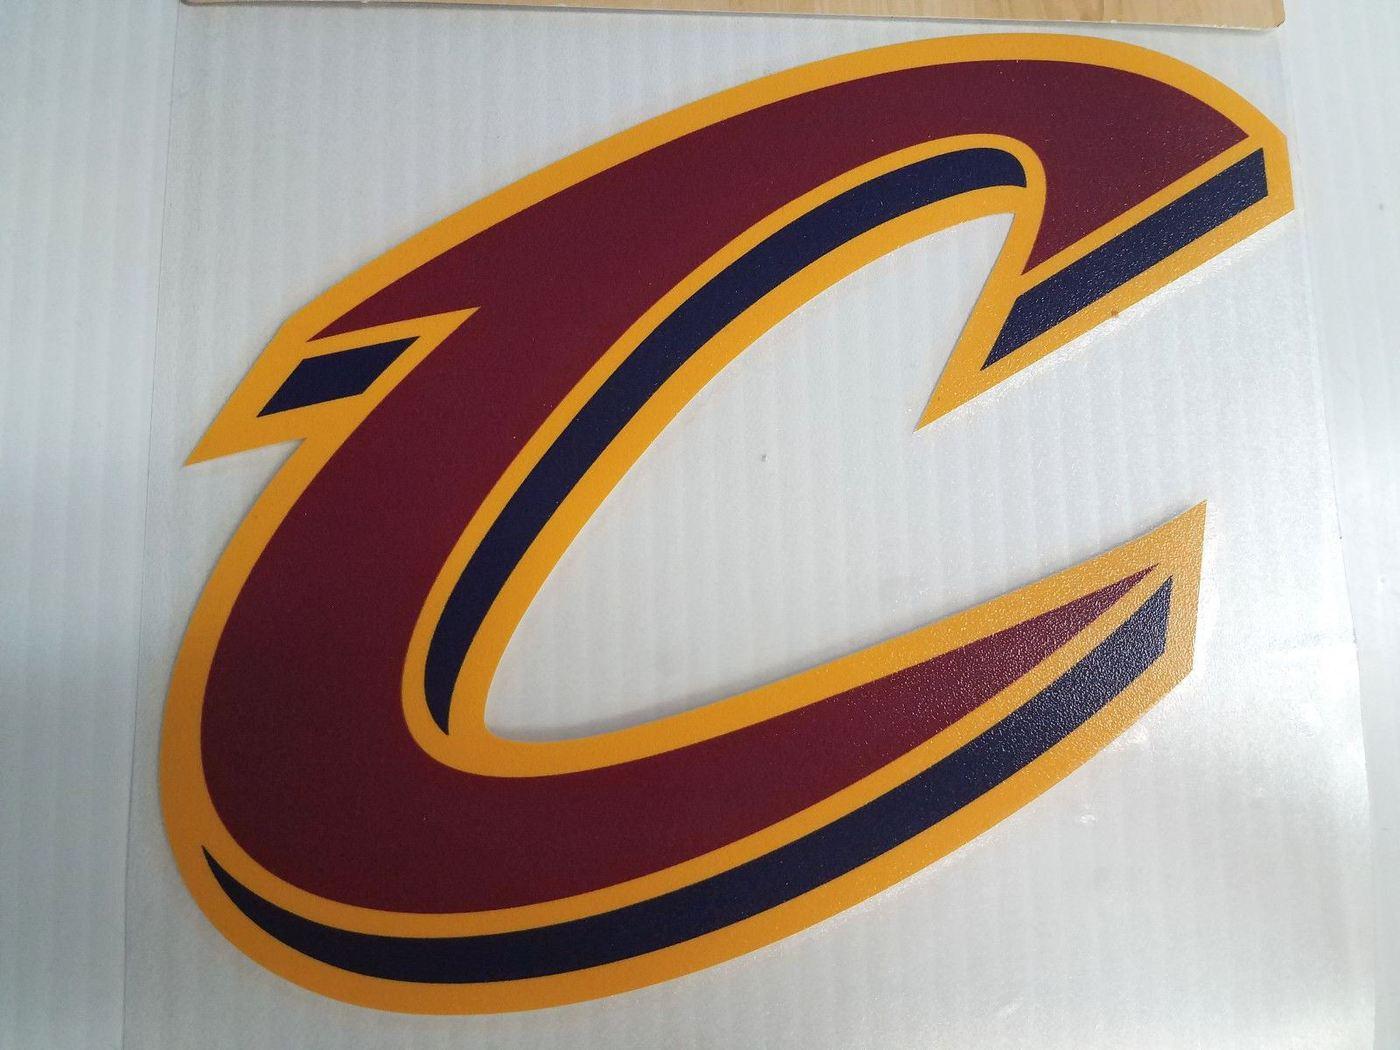 Cavs C Logo - Cleveland Cavaliers Colored C Window Die Cut Decal Wincraft Sticker